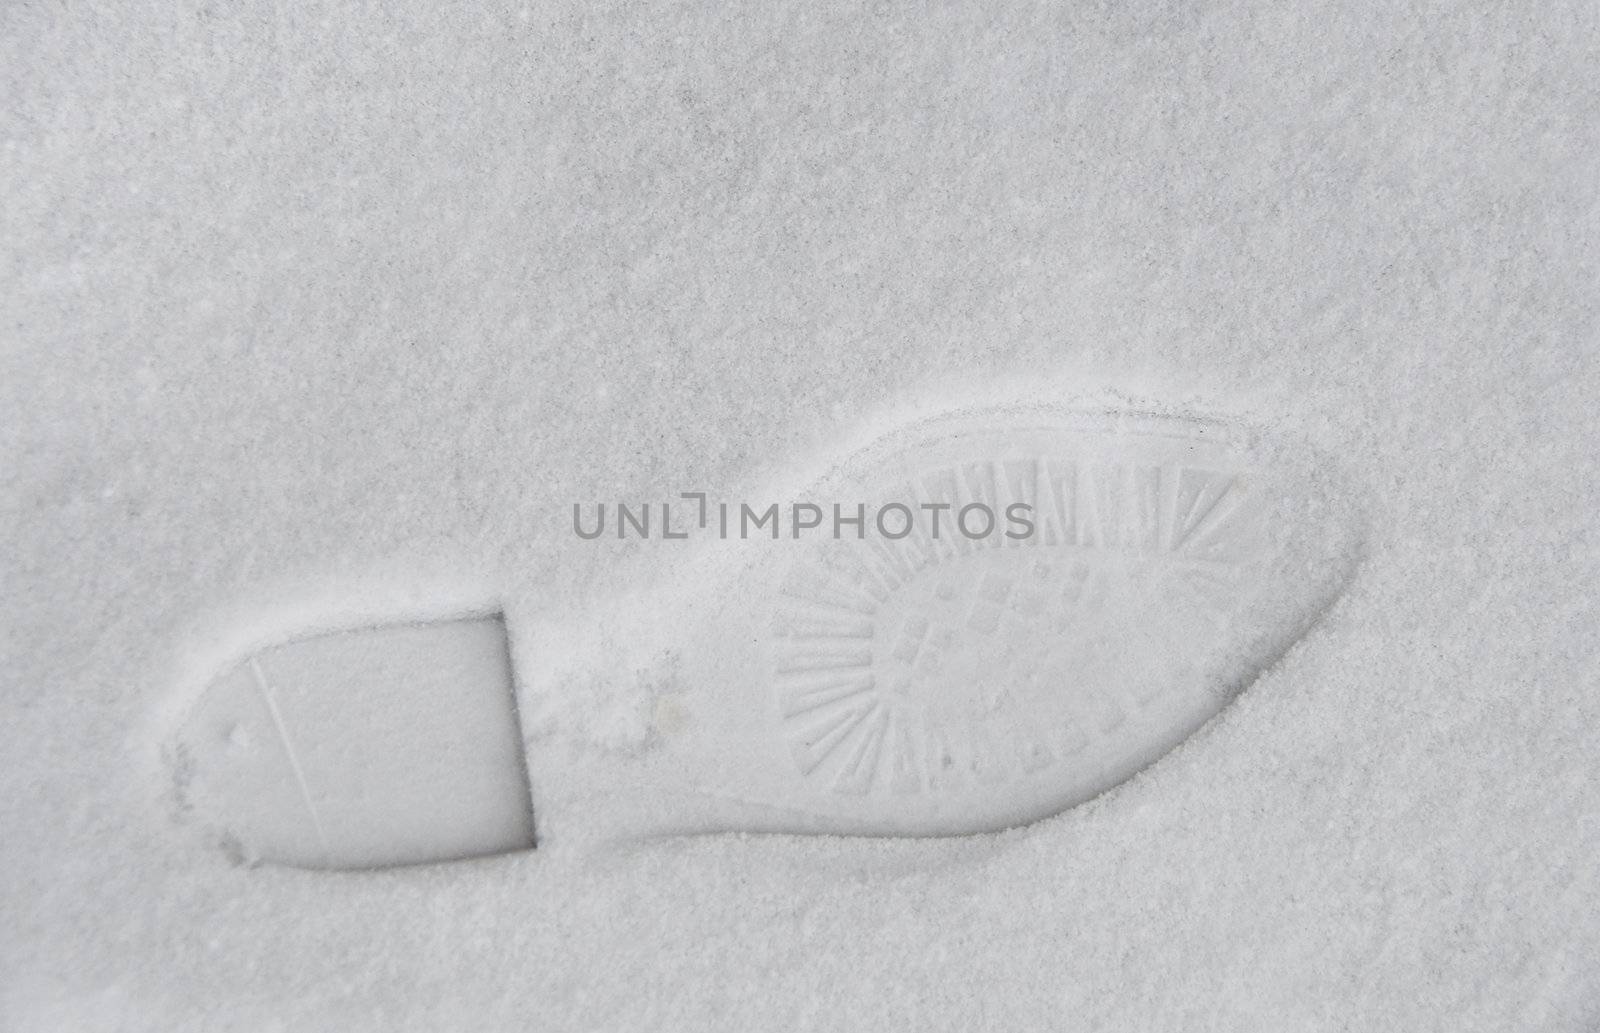 Footprint in the snow by dutourdumonde